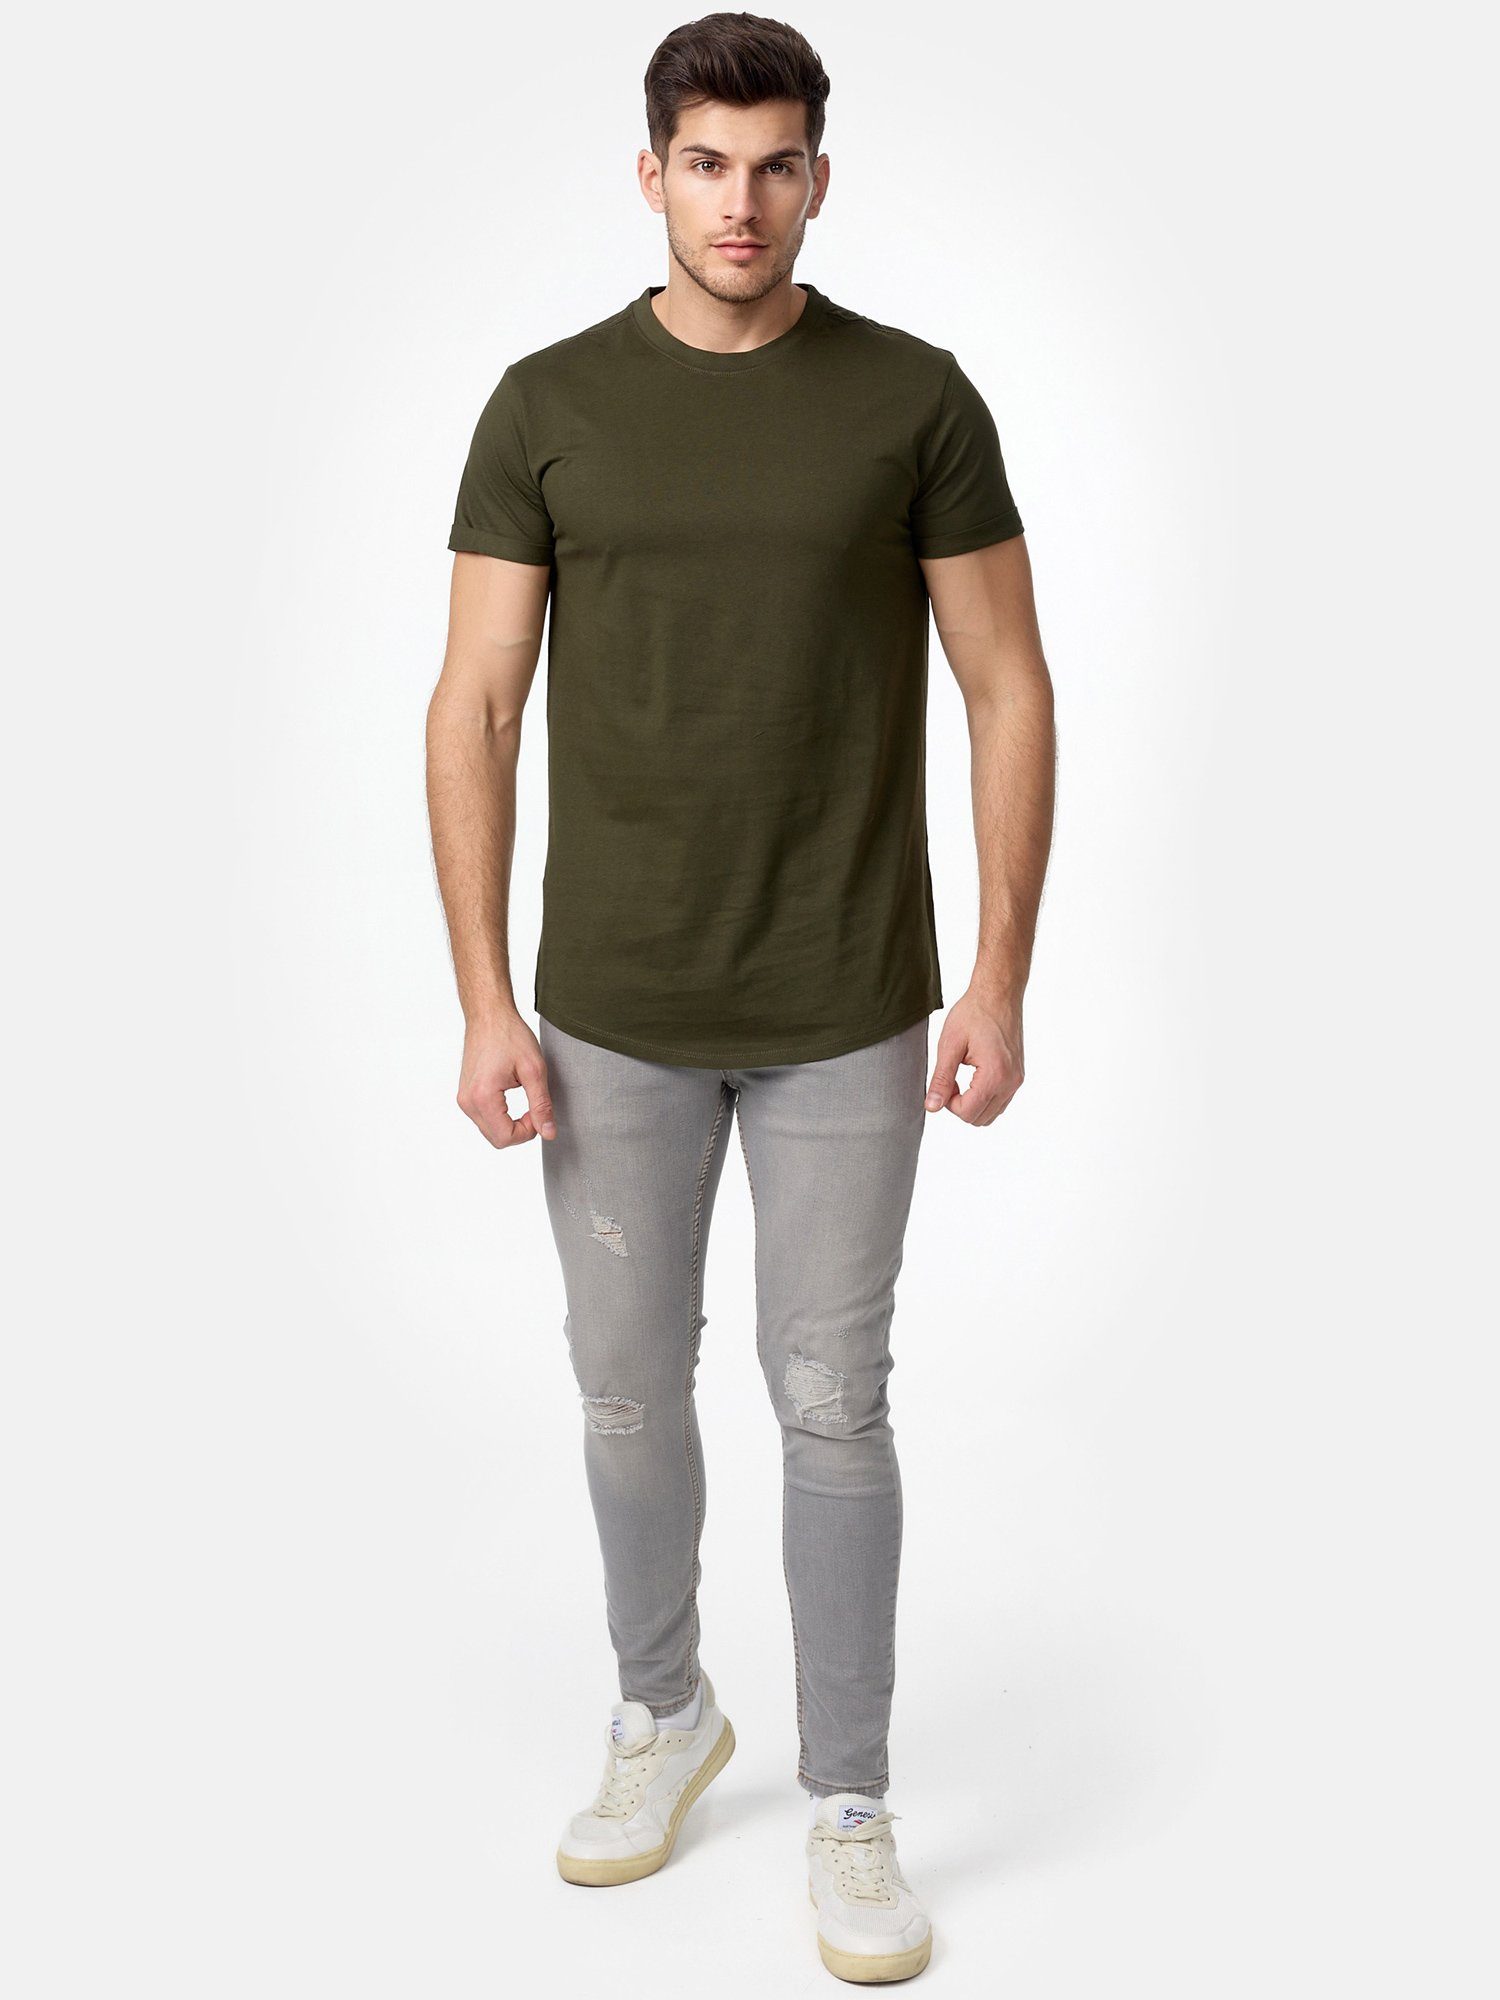 Basic Rundhalsshirt khaki T-Shirt E105 Herren Tazzio